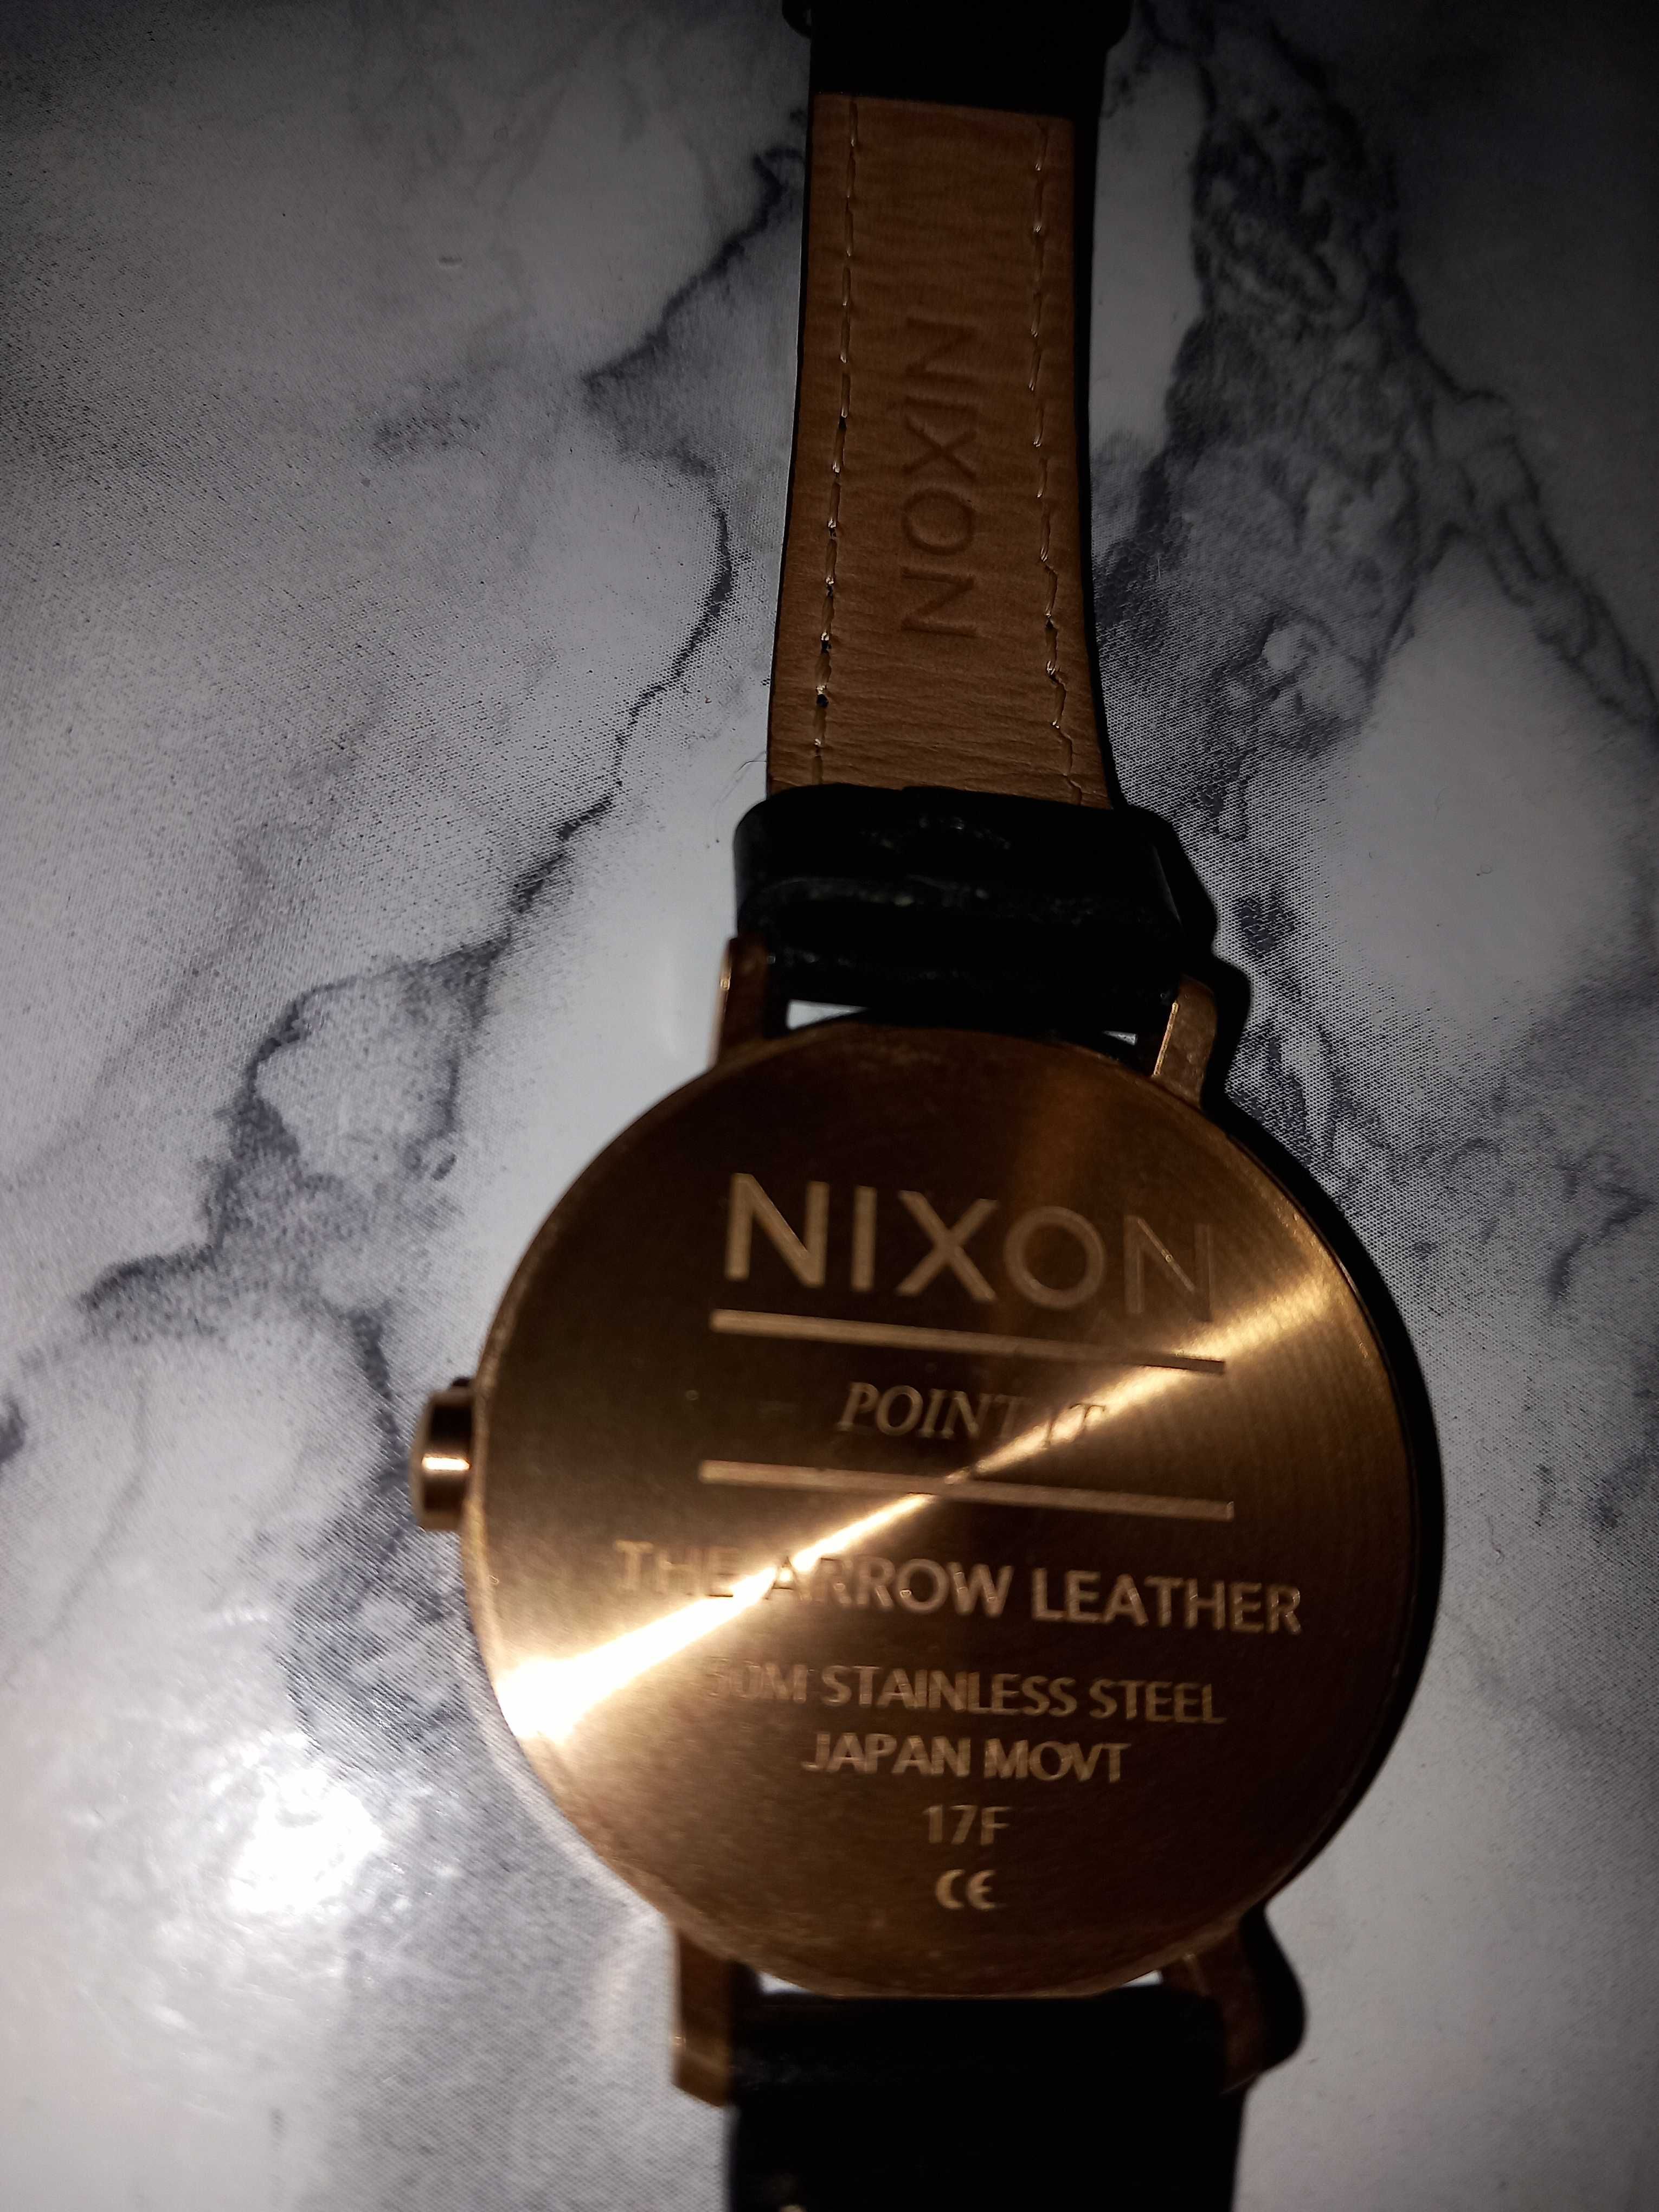 Zegarek Nixon bardzo ładnie